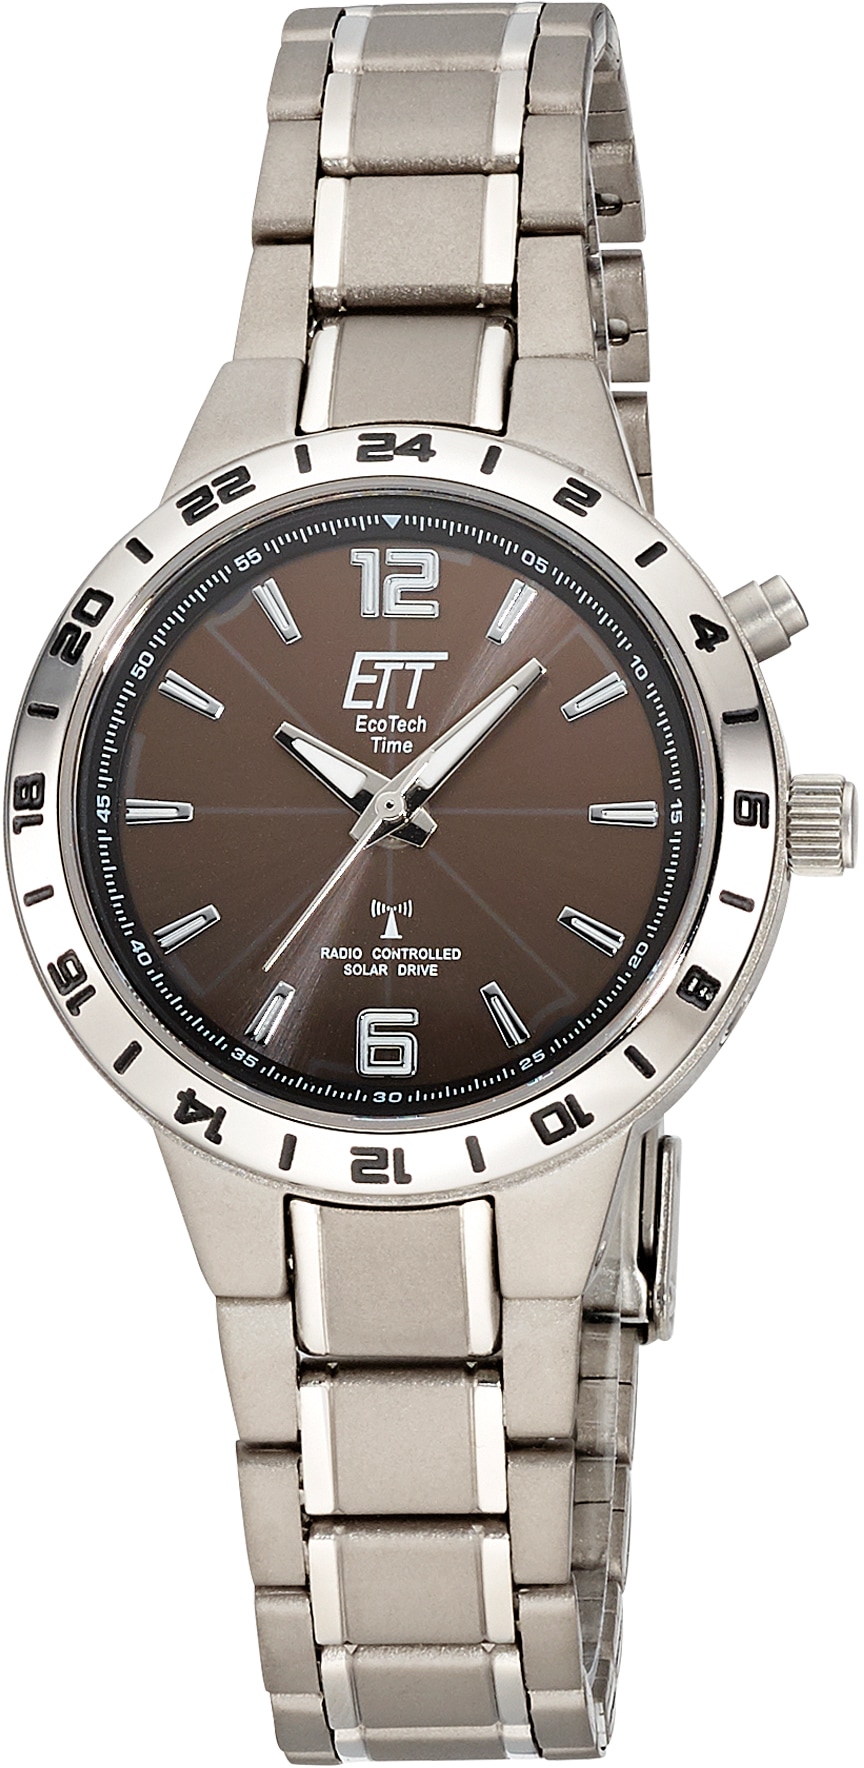 Funkuhr »Titan Basic, ELT-11446-21M«, Armbanduhr, Damenuhr, Solar